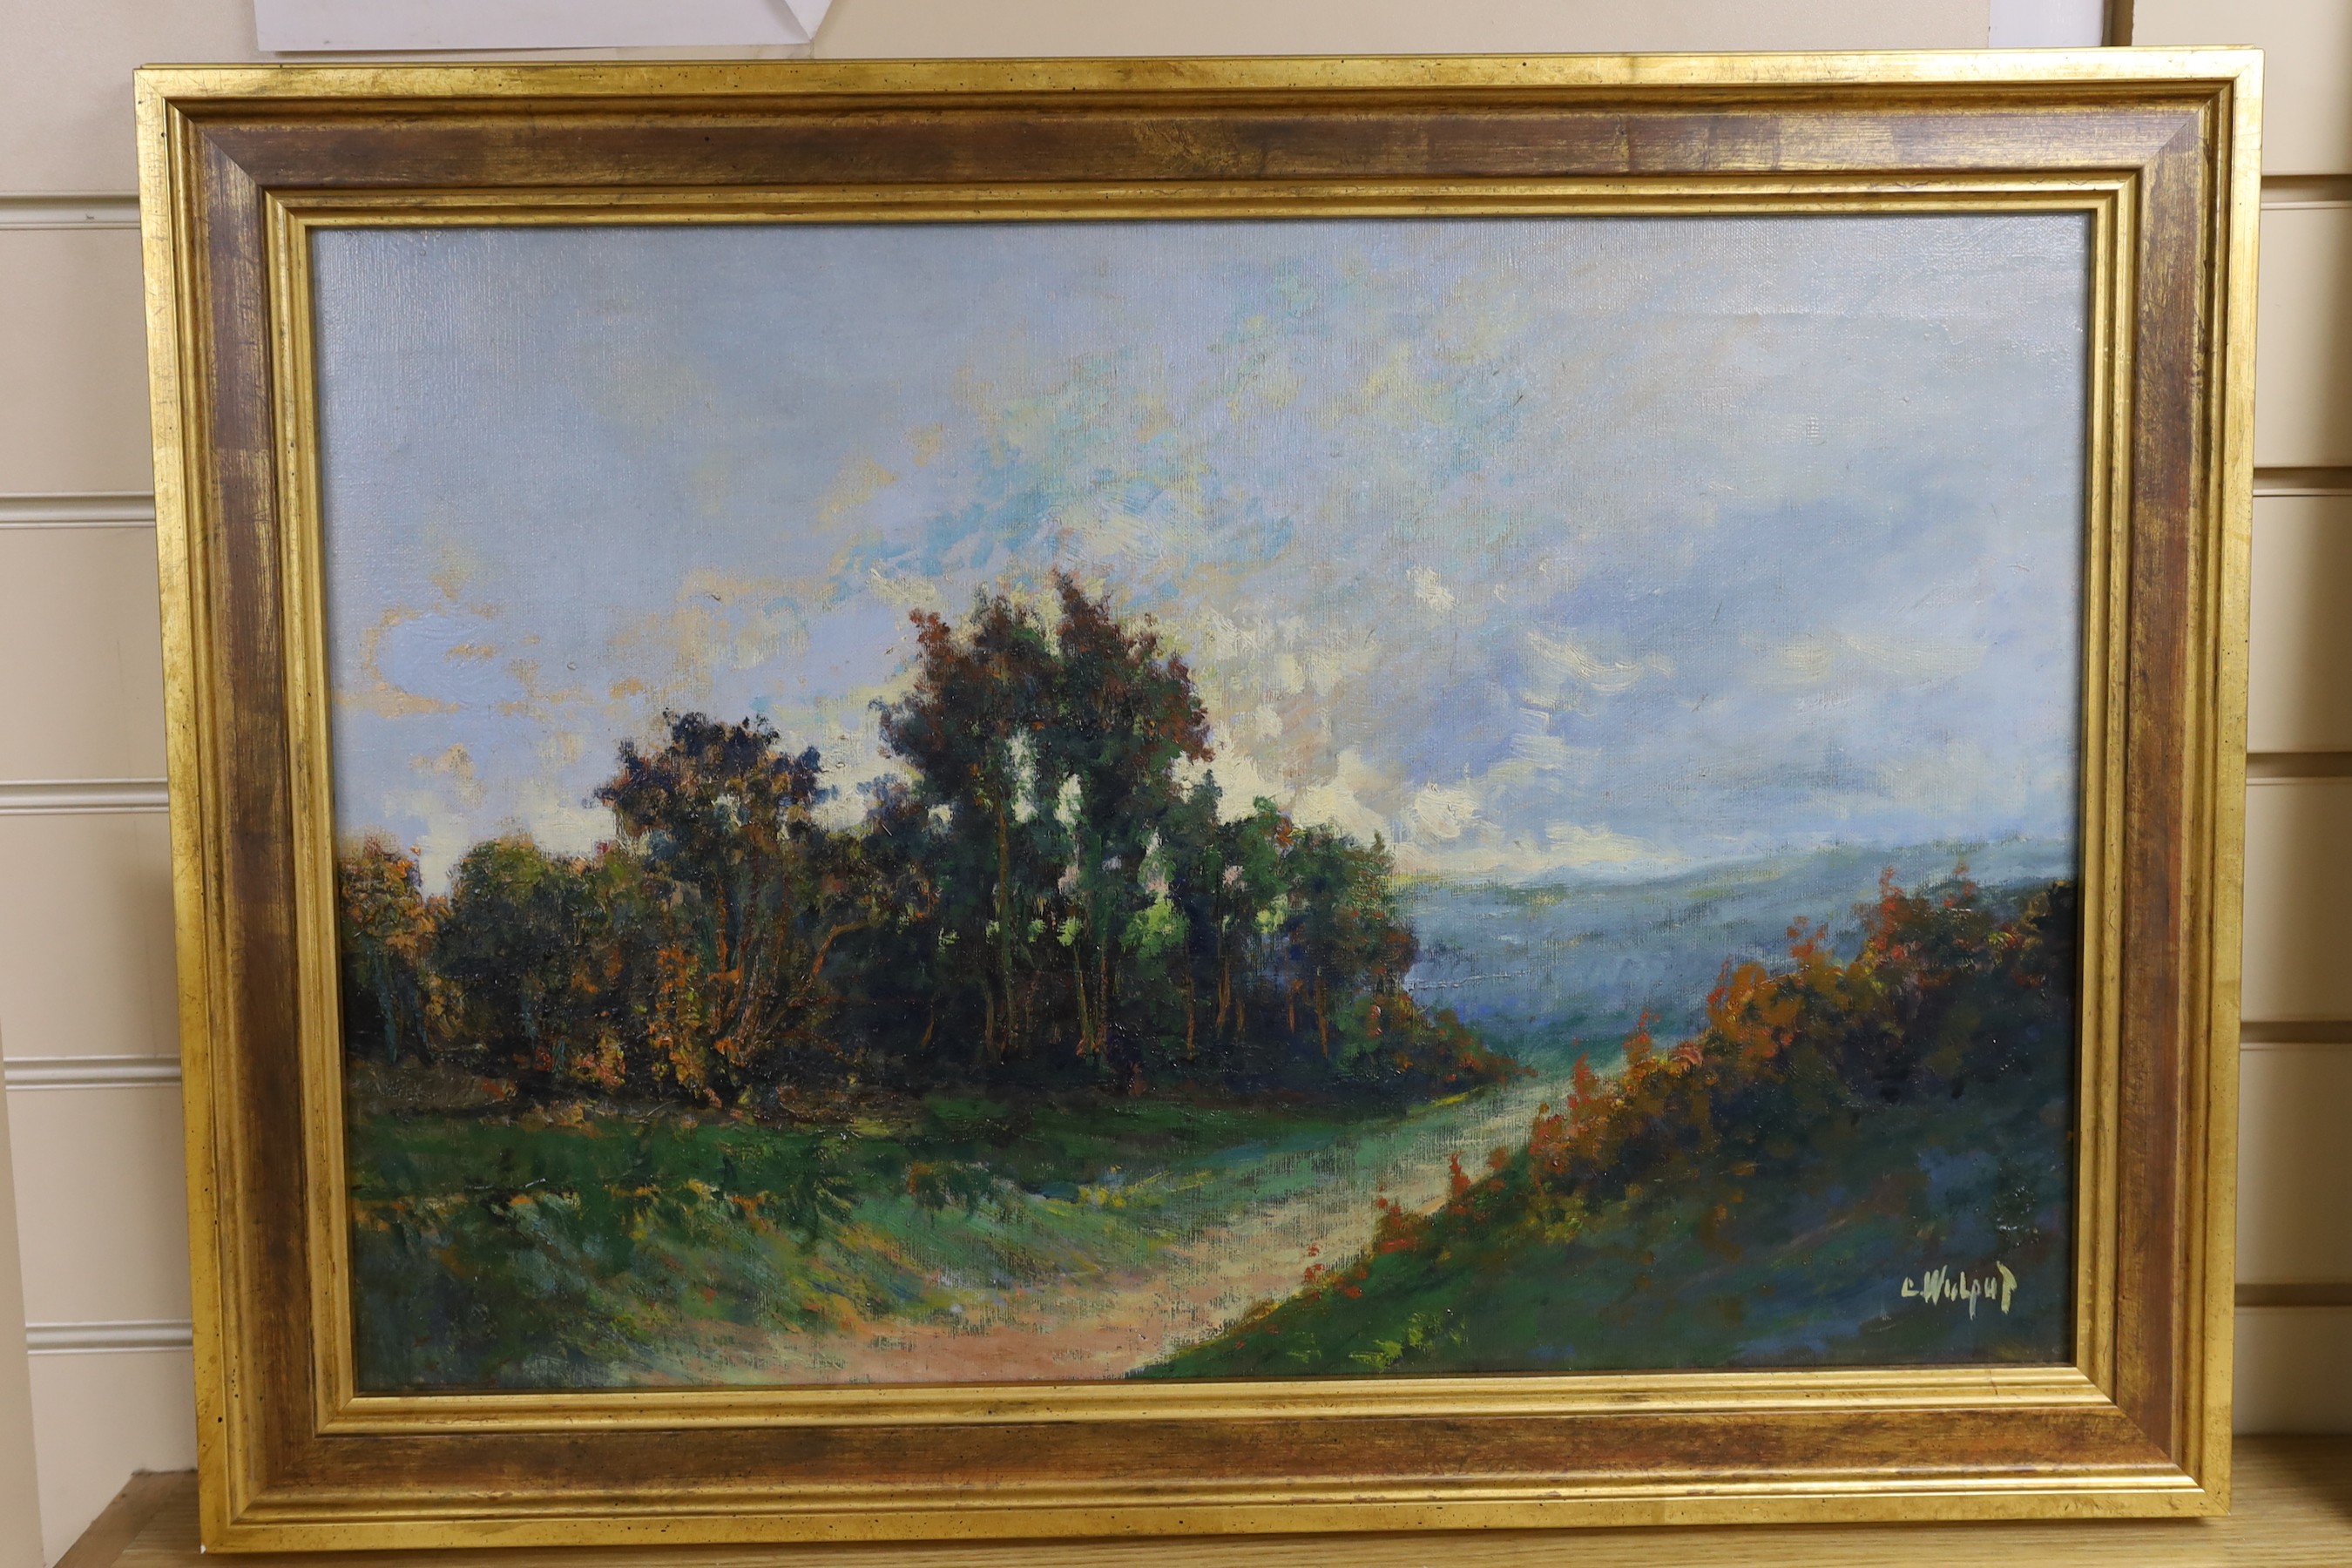 C. Wulput, oil on canvas, Heathland landscape, signed, 40 x 59cm